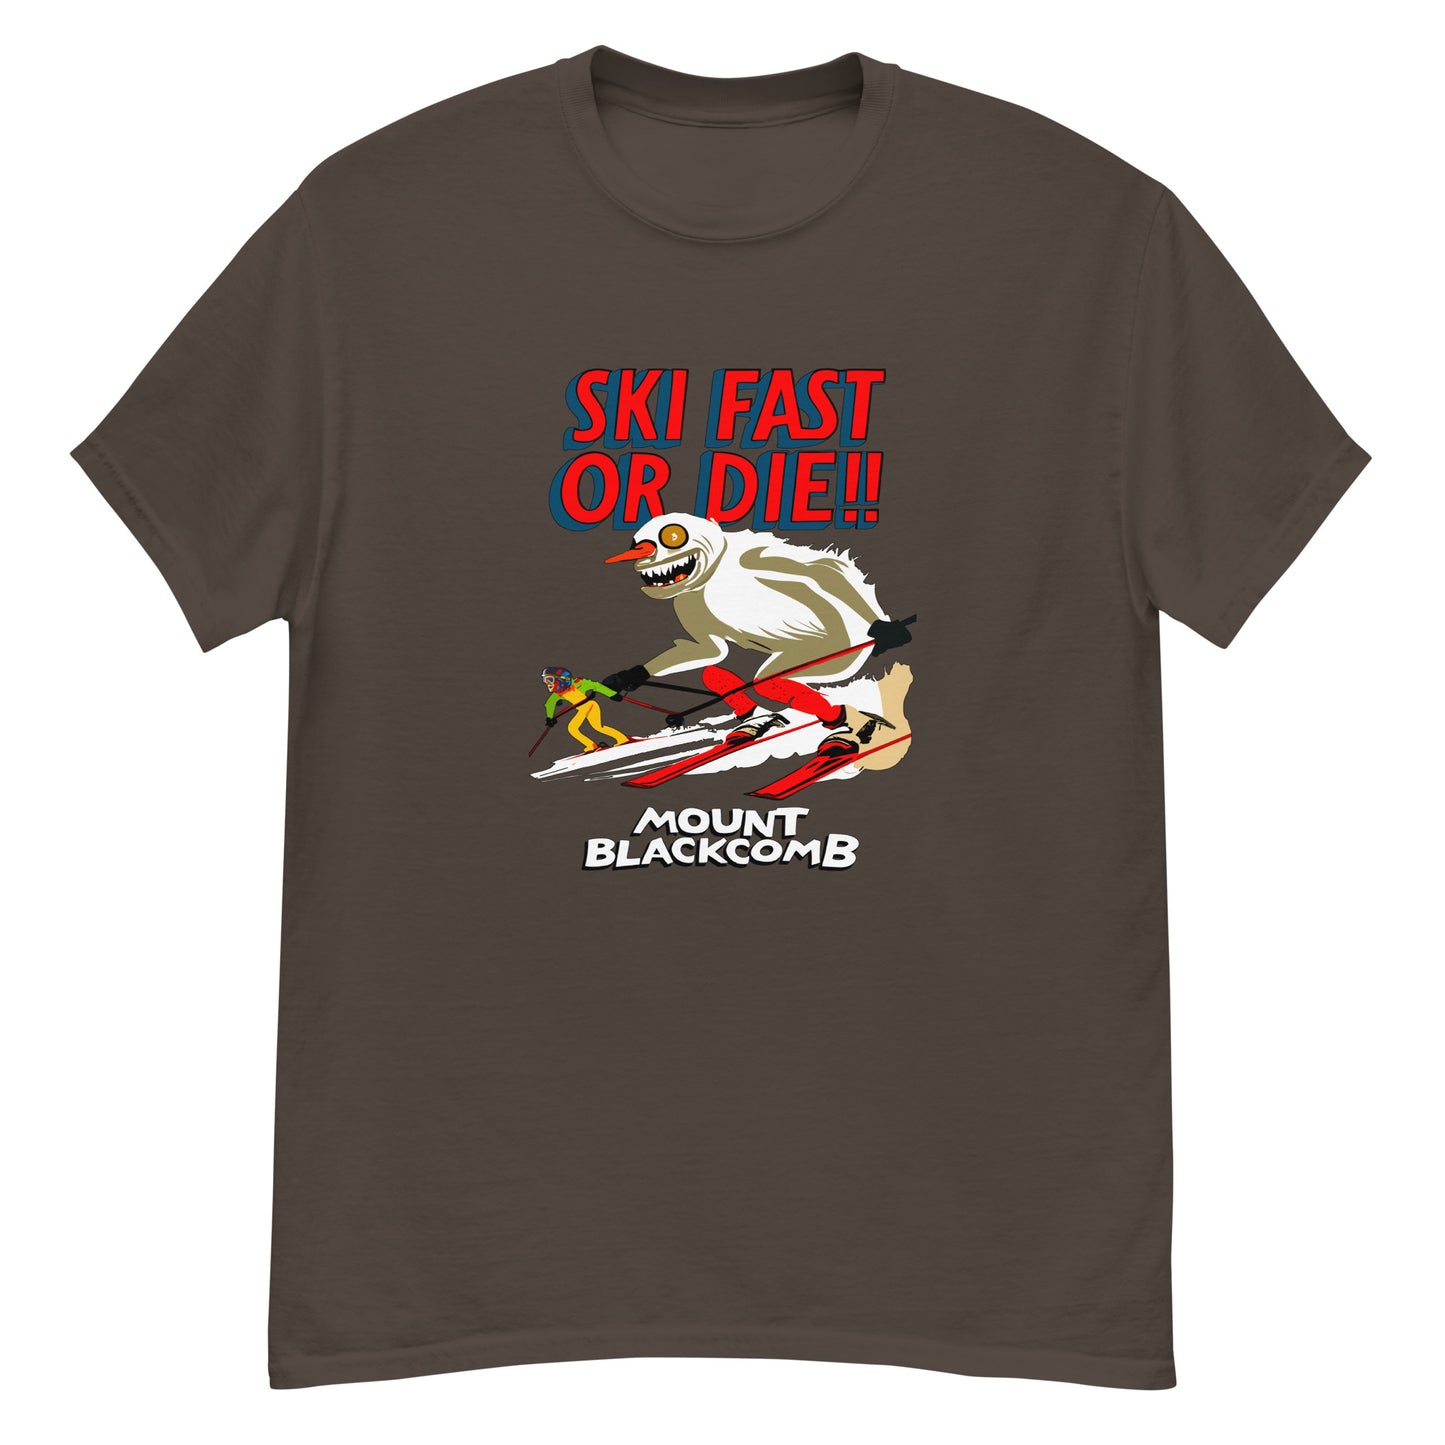 Ski fast or die yeti skiing mount blackcomb printed t-shirt by Whistler Shirts